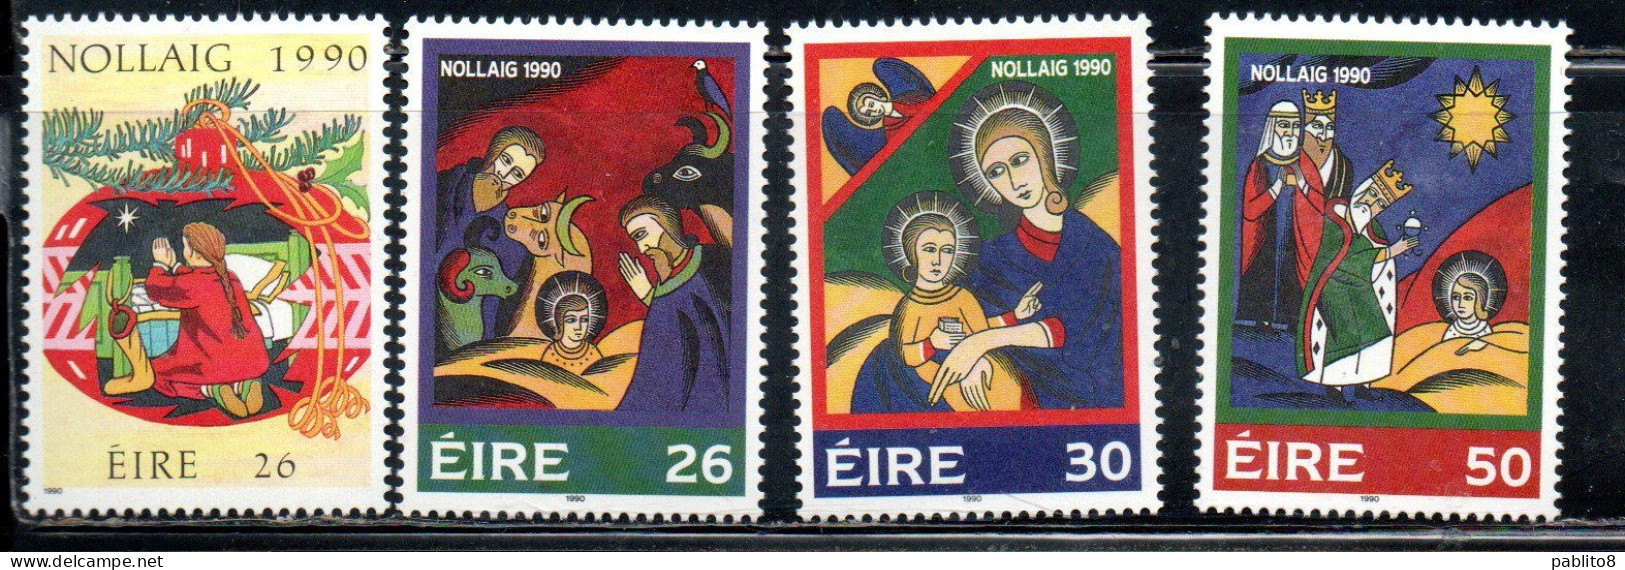 EIRE IRELAND IRLANDA 1990 CHRISTMAS ANNUNCIATION NOLLAIG NATALE NOEL WEIHNACHTEN NAVIDAD COMPLETE SET SERIE COMPLETA MNH - Nuovi